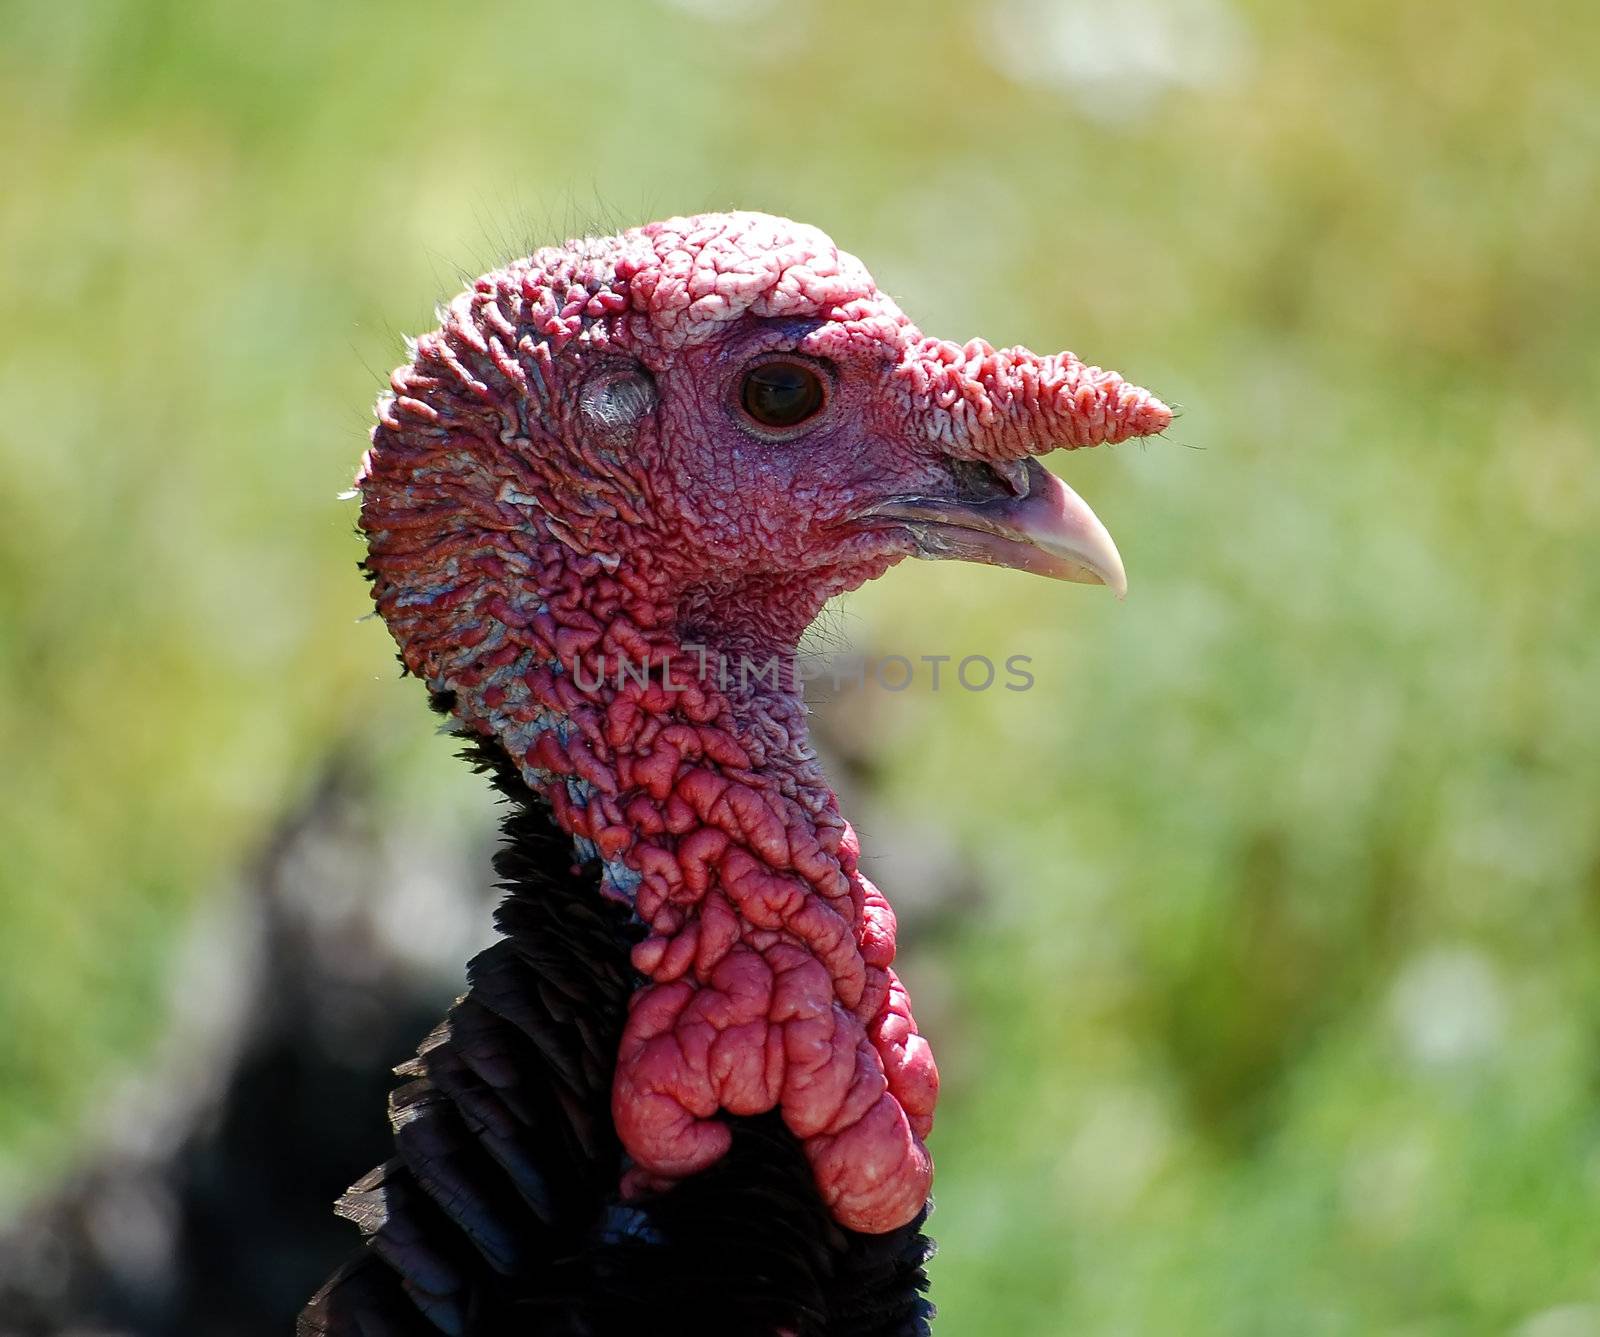 Portrait of a wild turkey